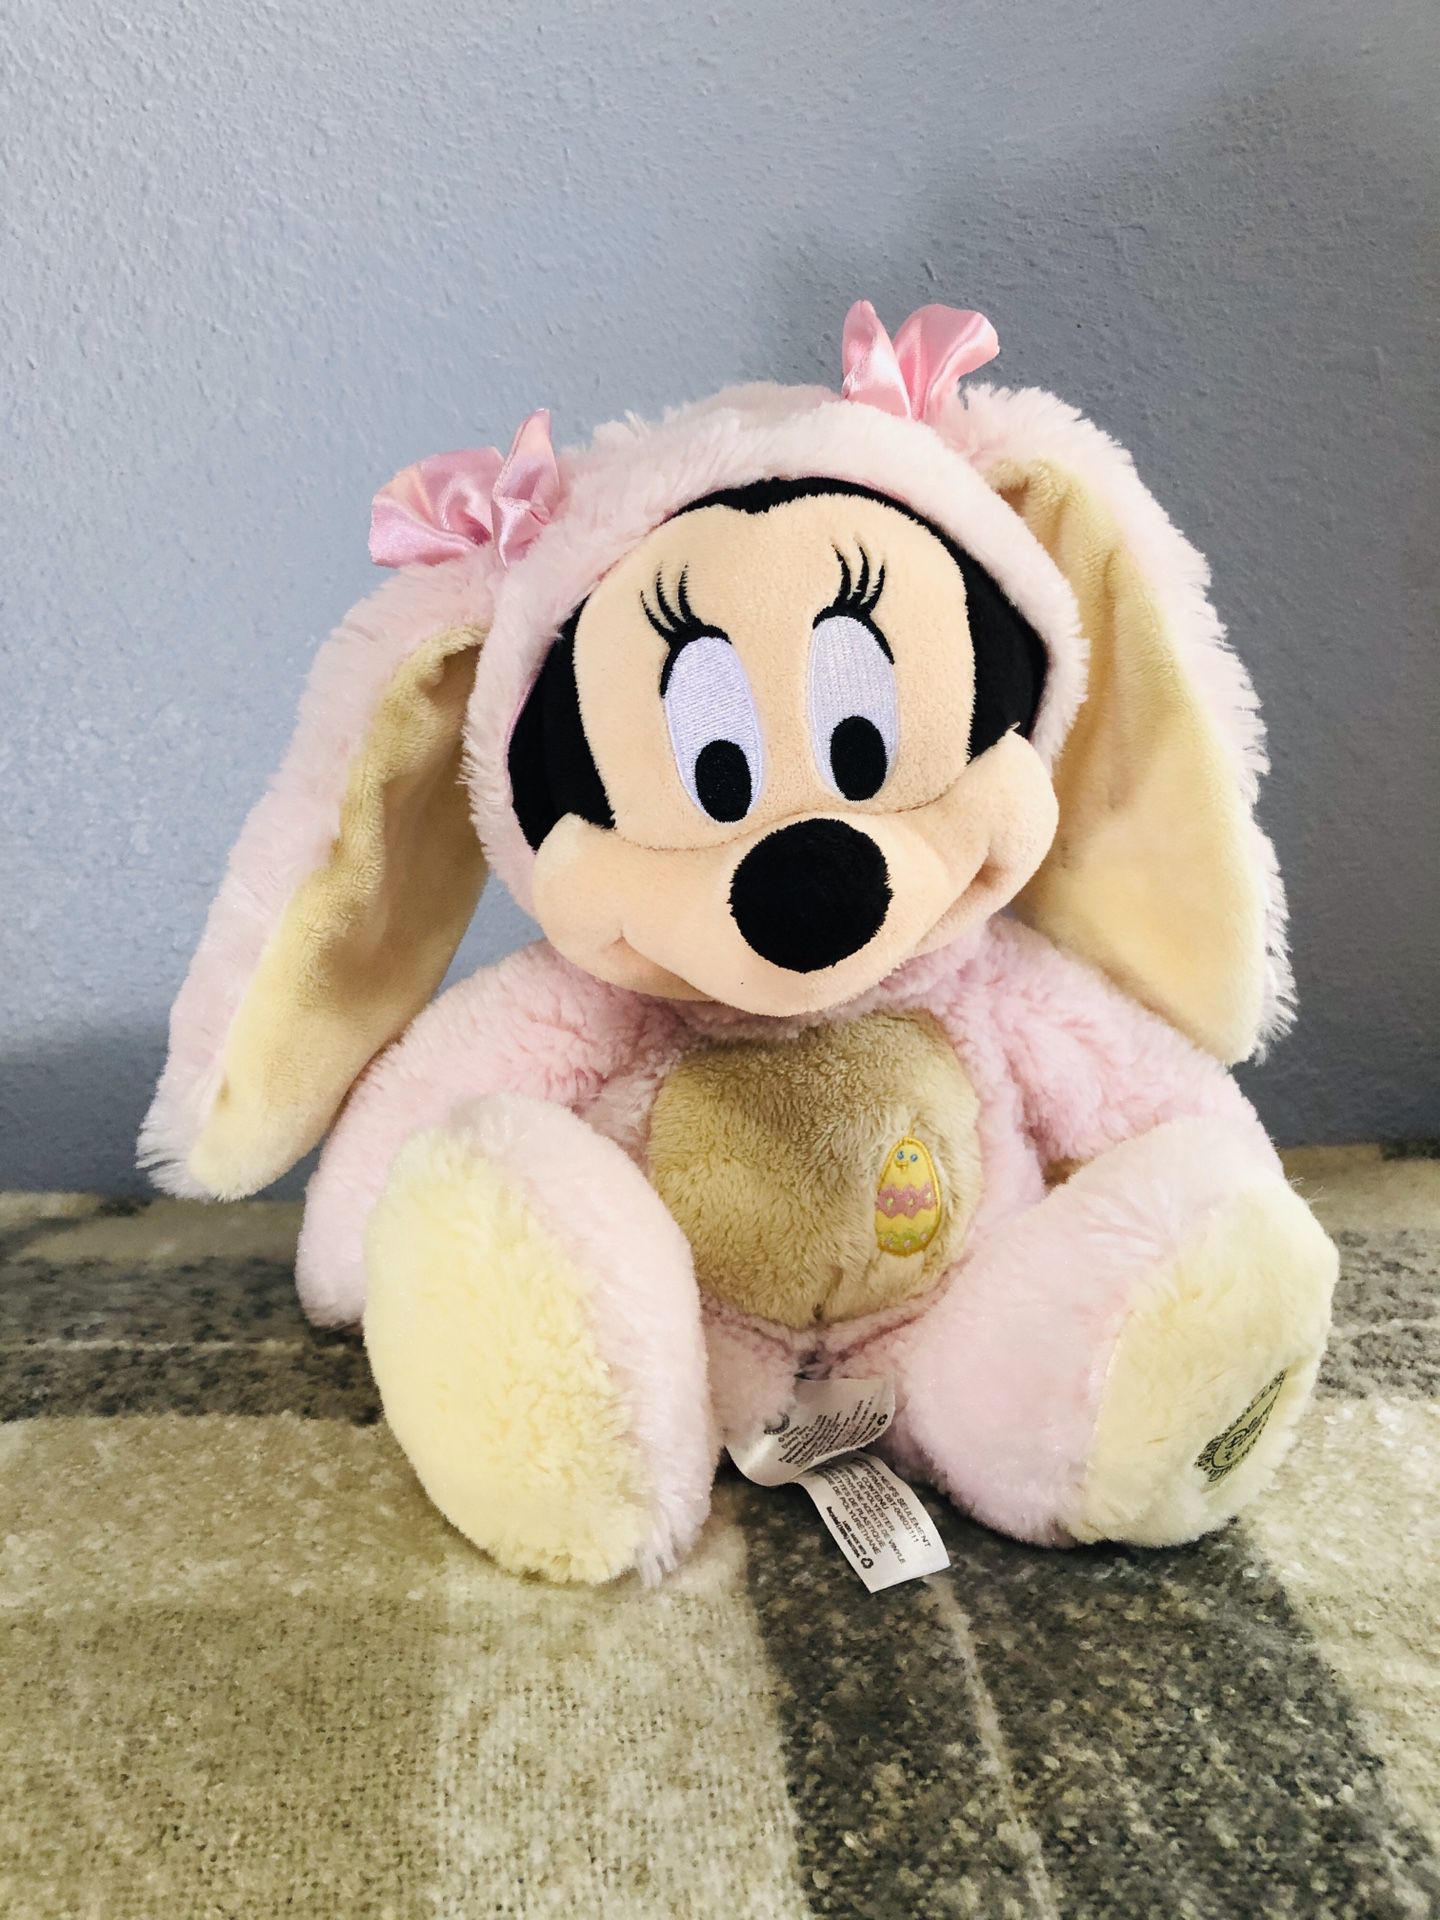 Disney Minnie mouse plush stuffed animal